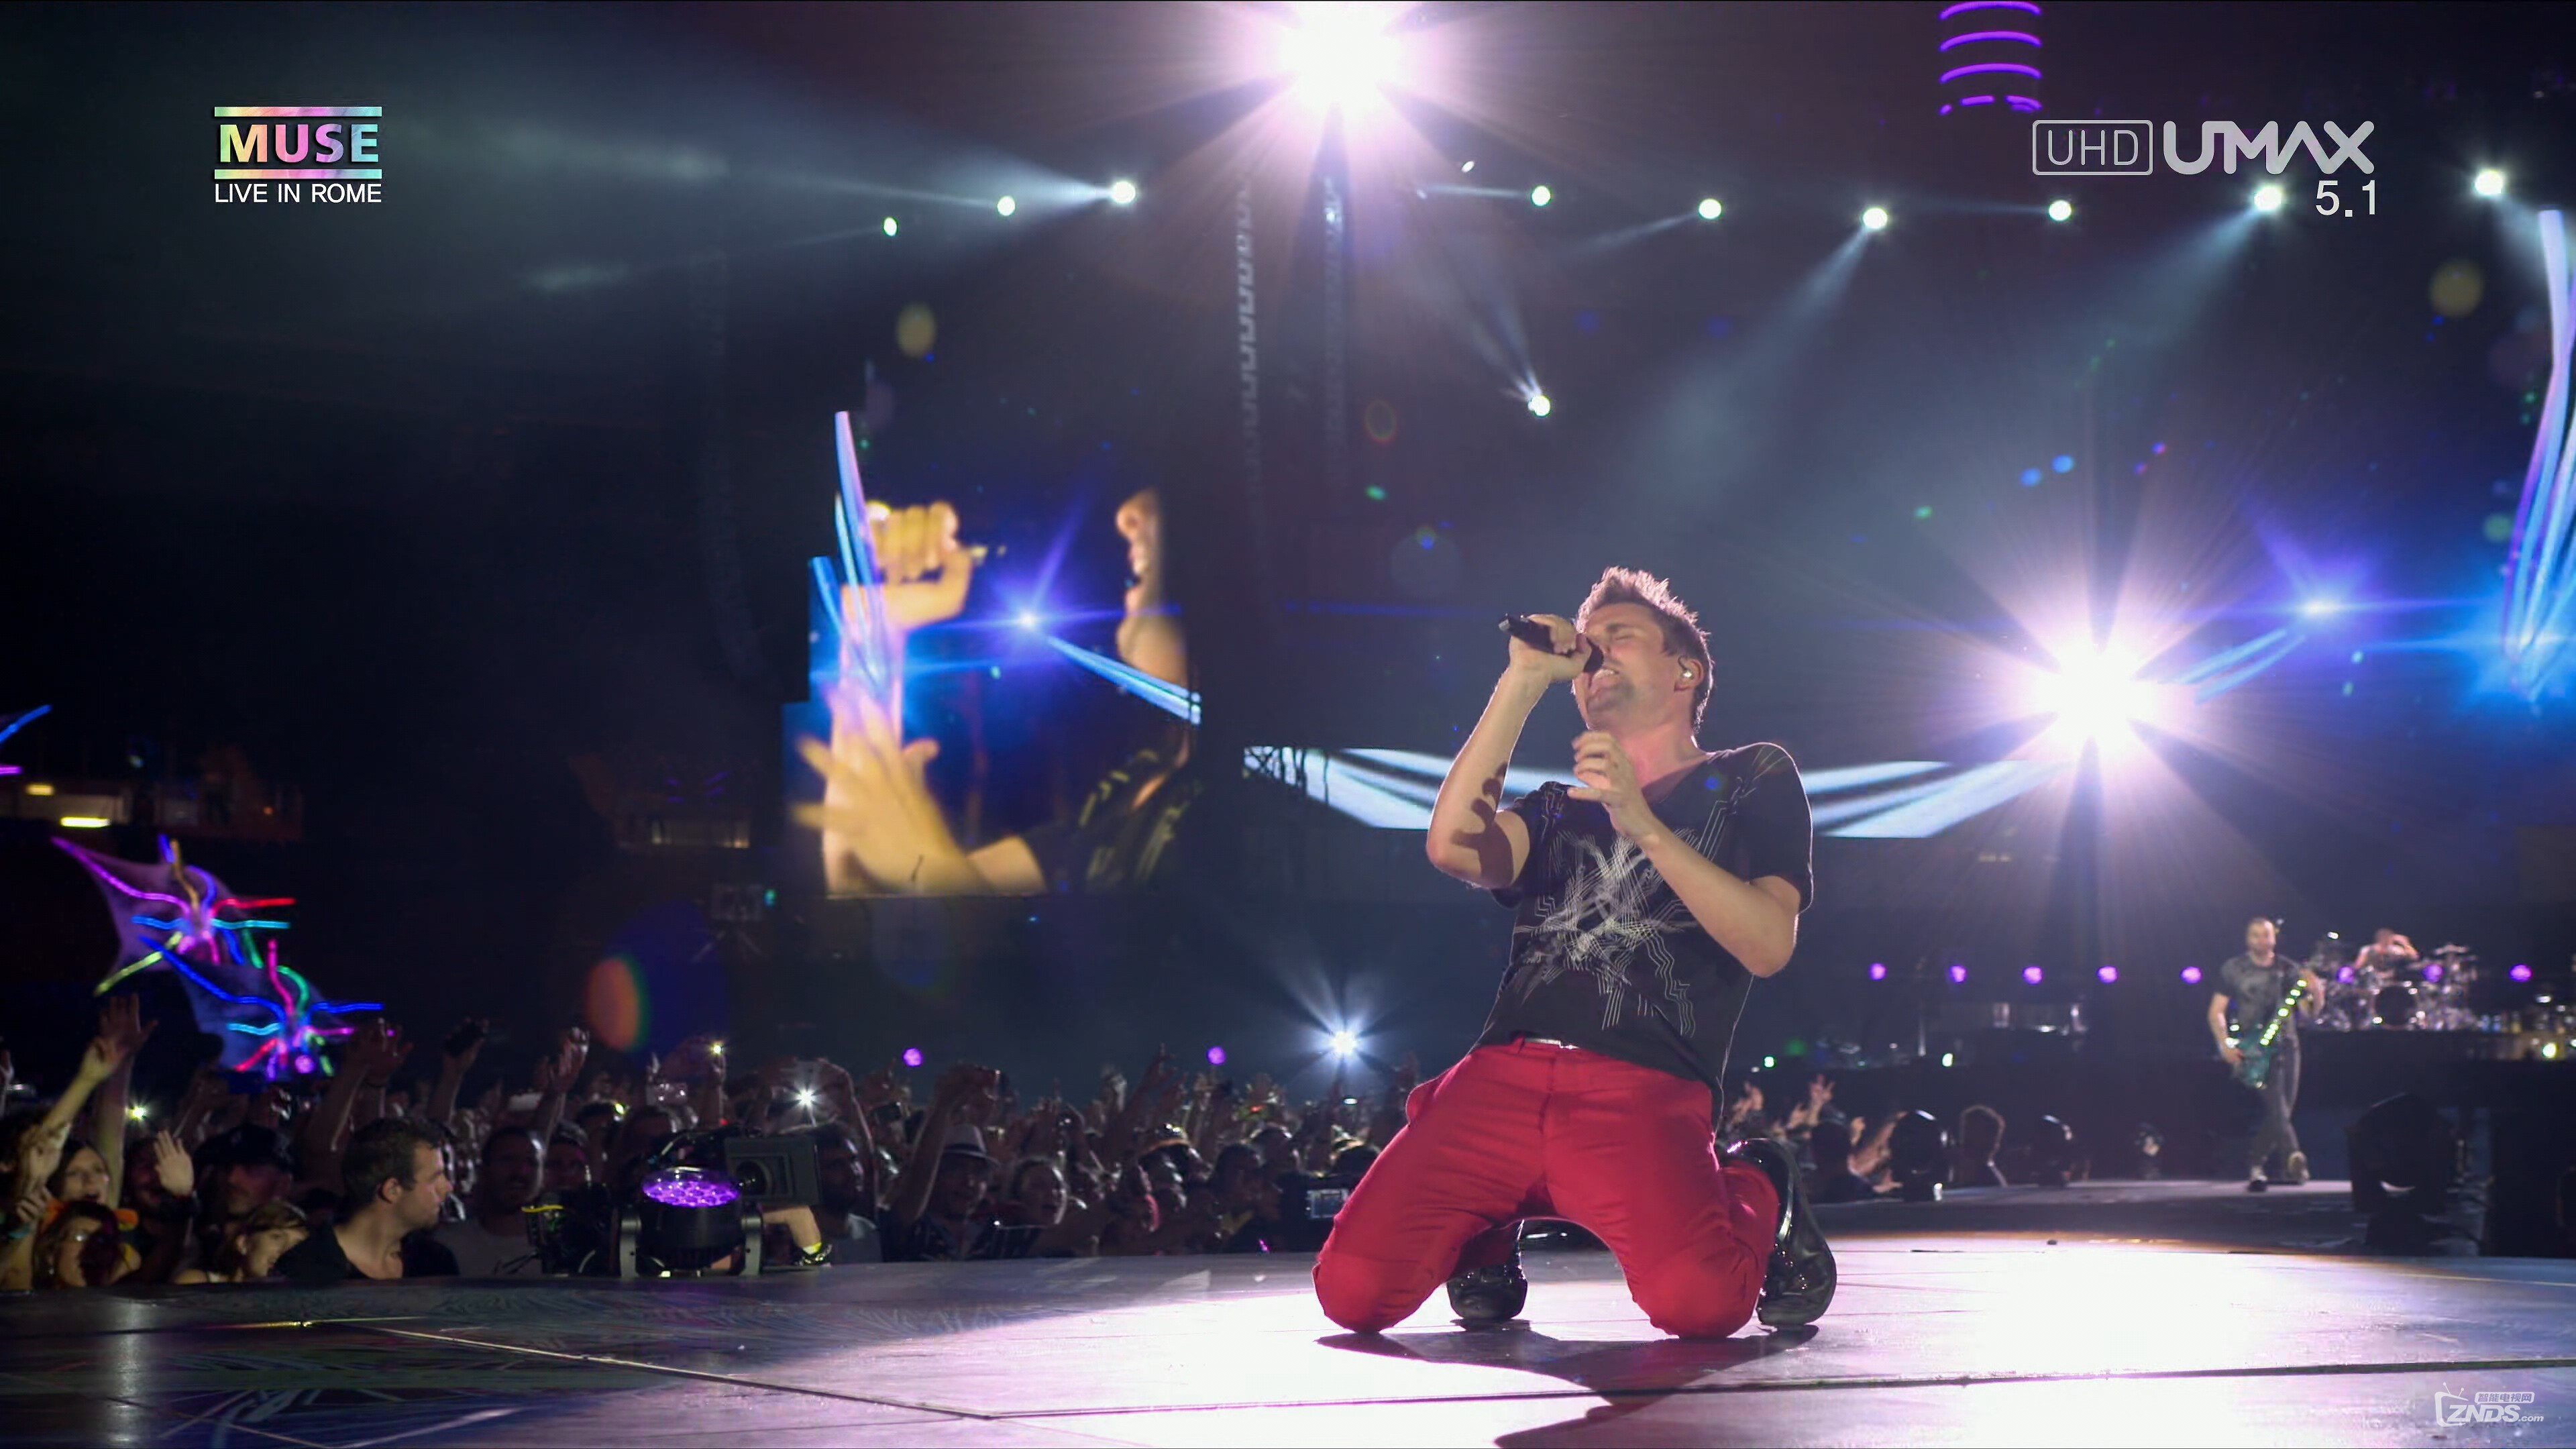 Muse.Live.At.Rome.Olympic.Stadium.2013.2160p.UHDTV.HEVC.mkv_20160312_235421.234.jpg